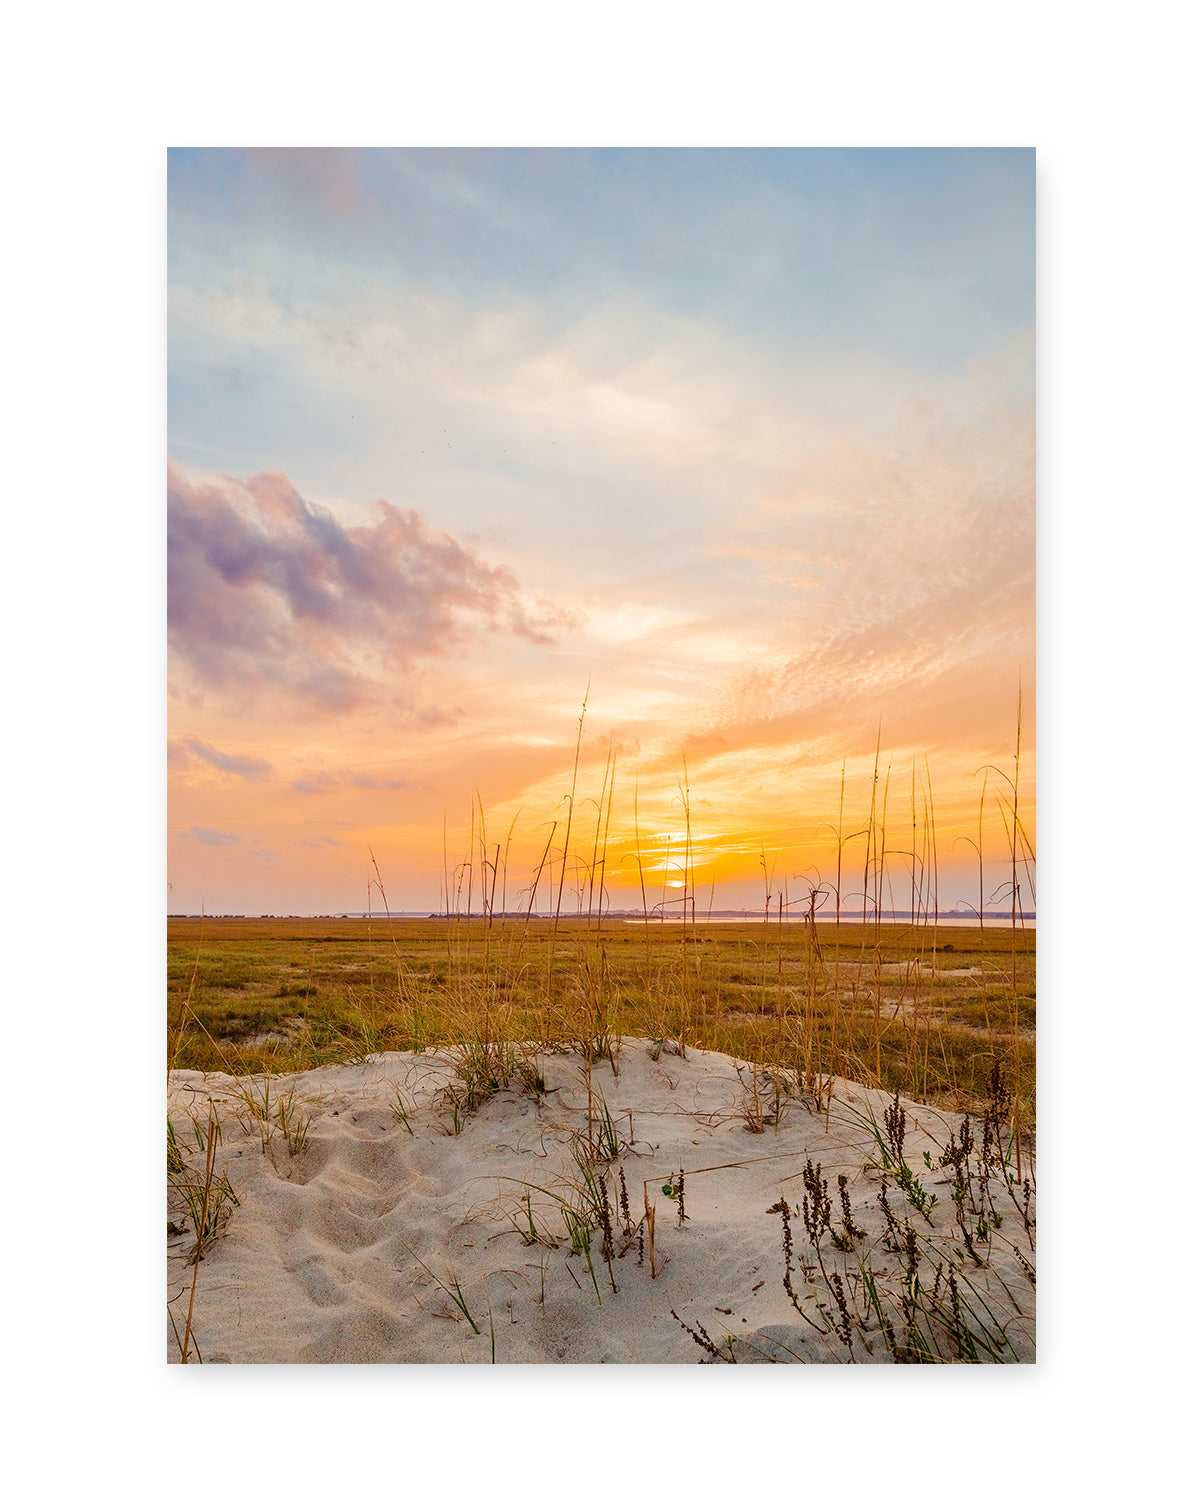 warm sunset sand dunes photograph